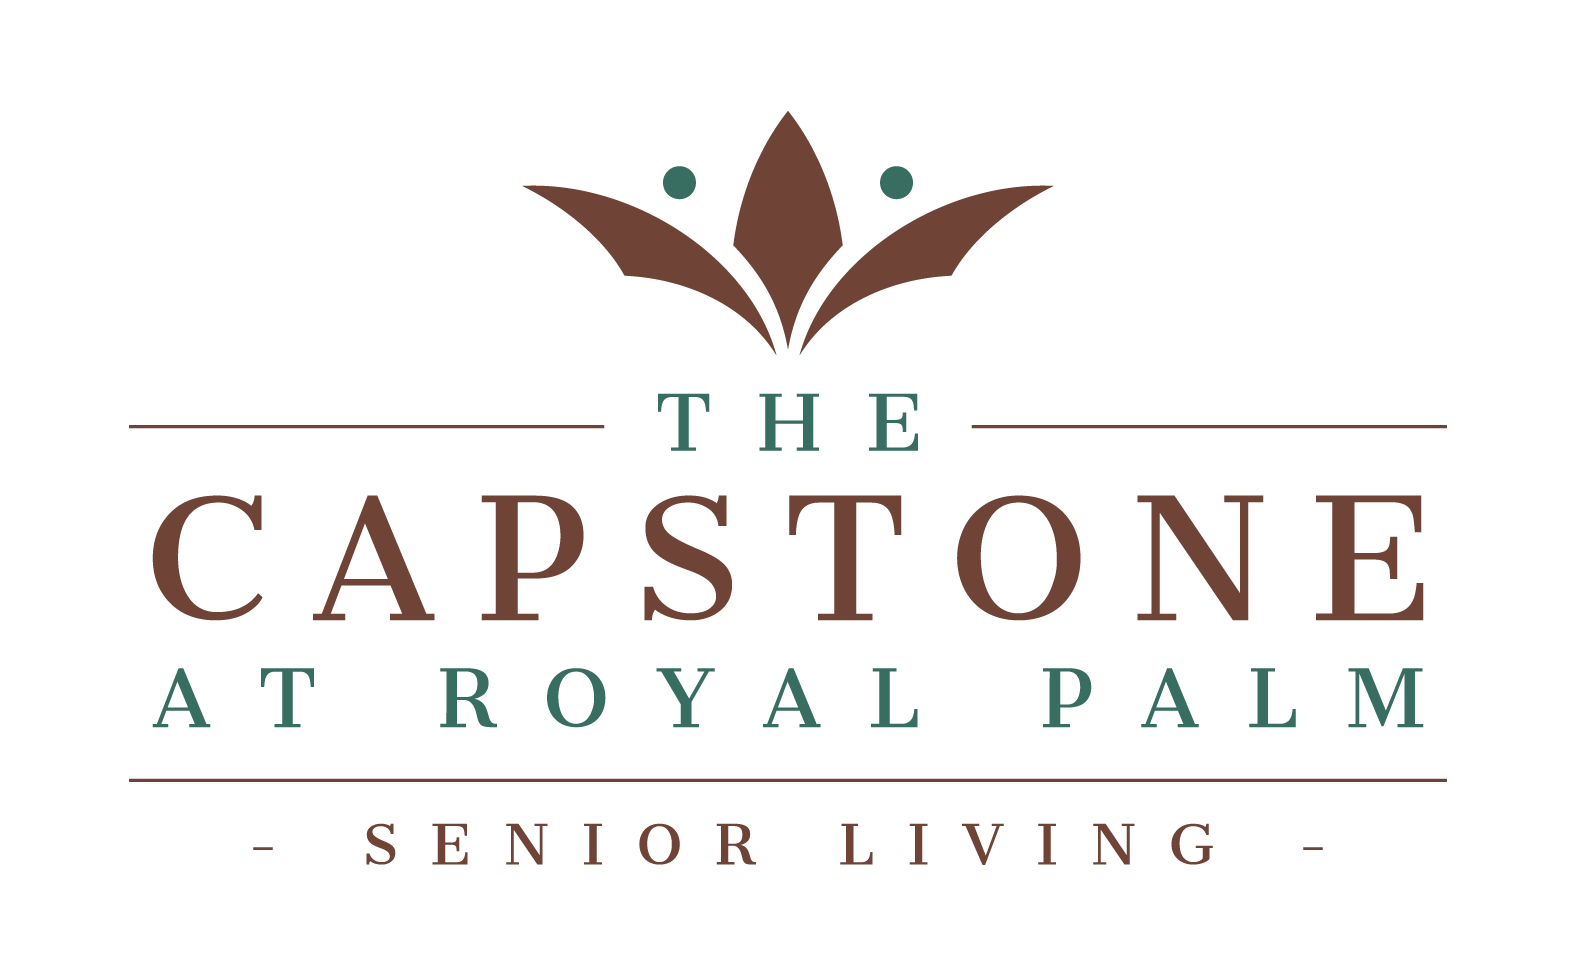 The Capstone at Royal Palm Senior Living (Tier 2)